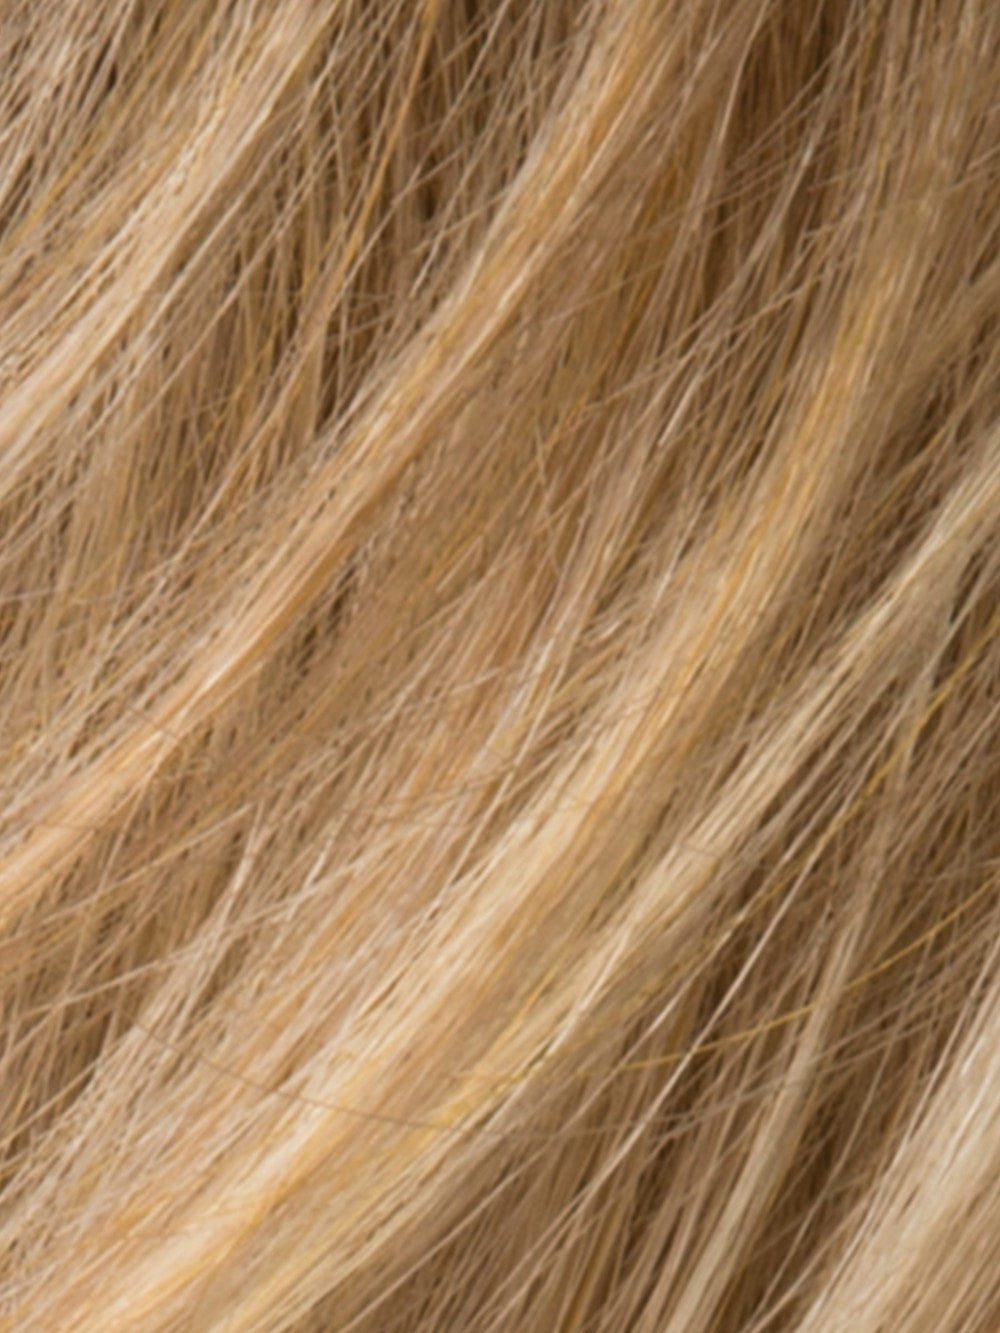 CARAMEL MIX | Dark Honey Blonde, Lightest Brown, and Medium Gold Blonde Blend